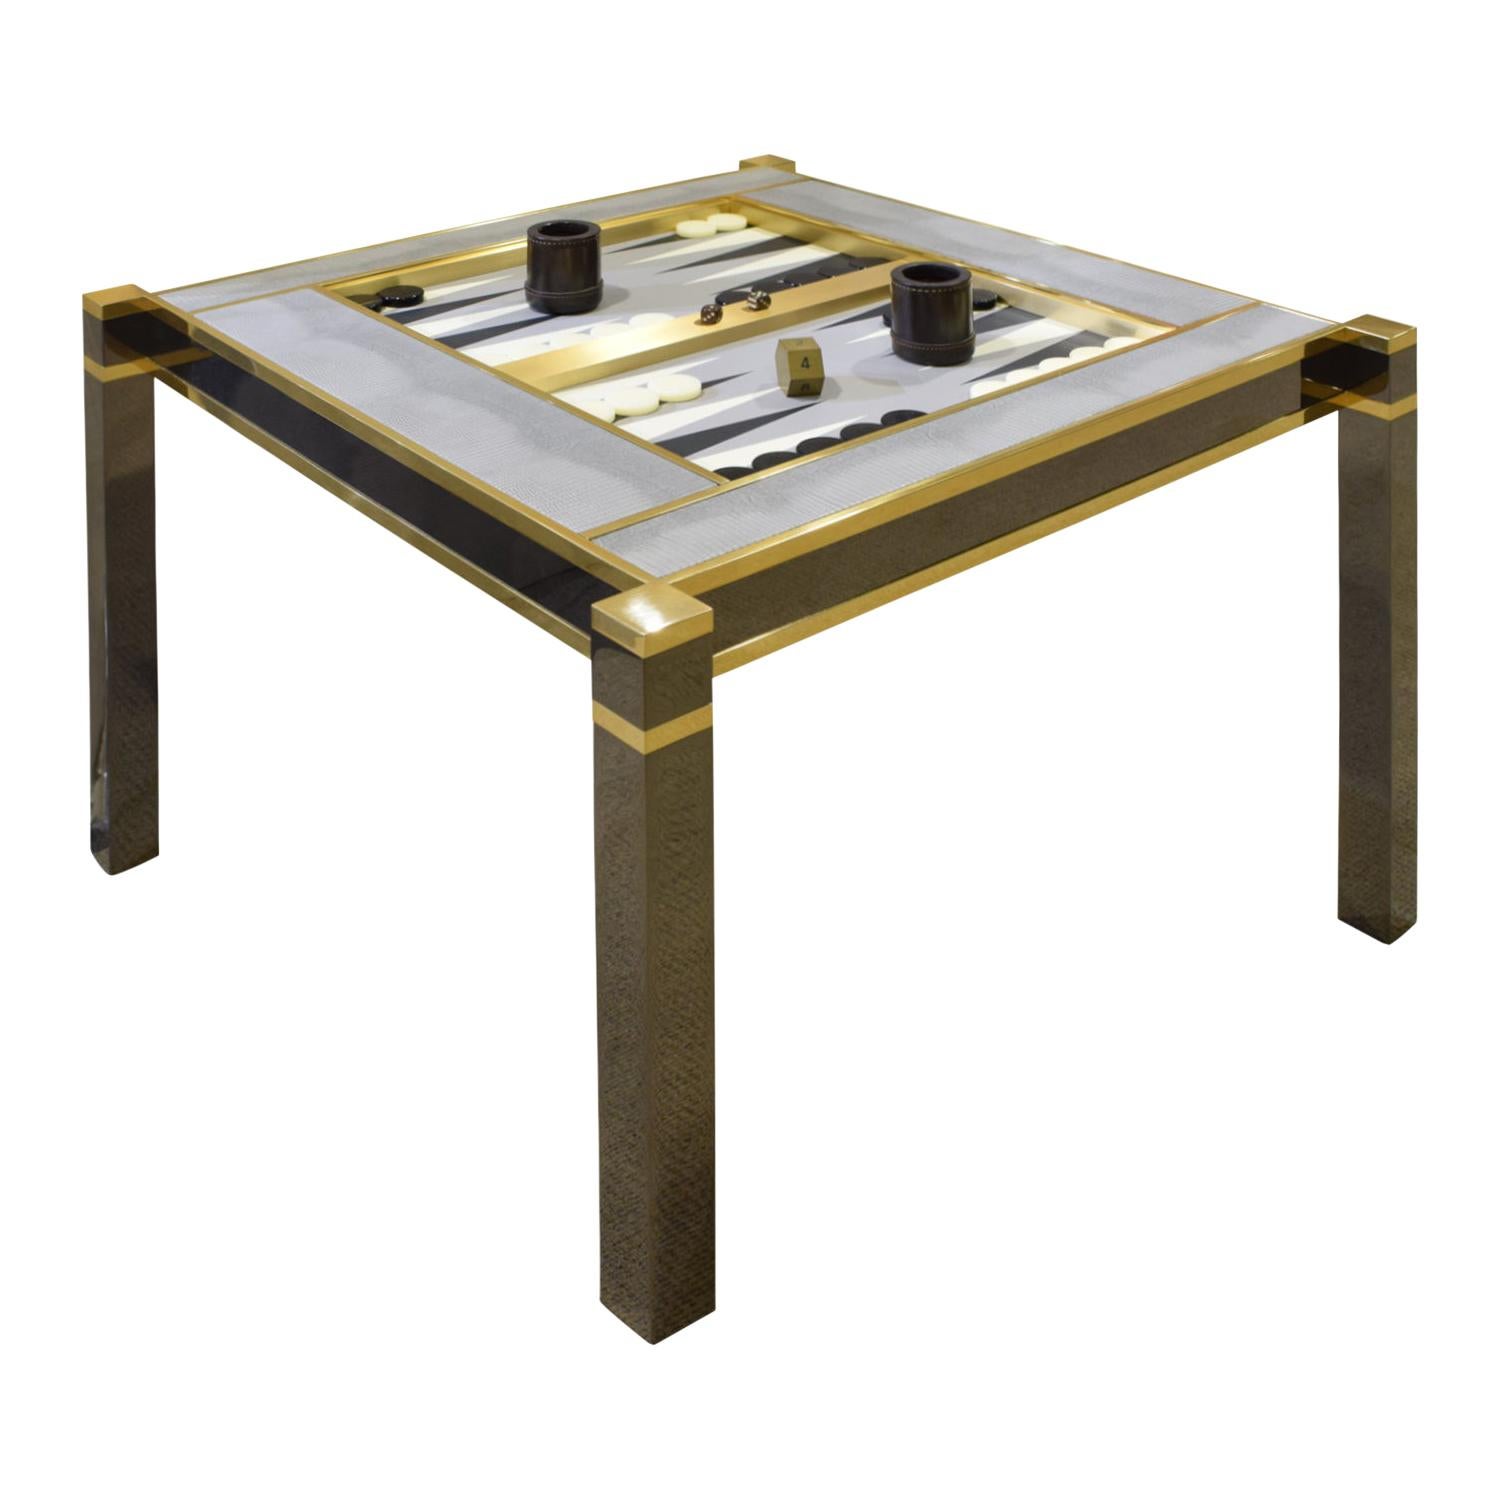 Karl Springer Incredible “Square Leg Game Table” in Gunmetal and Brass, 1970s